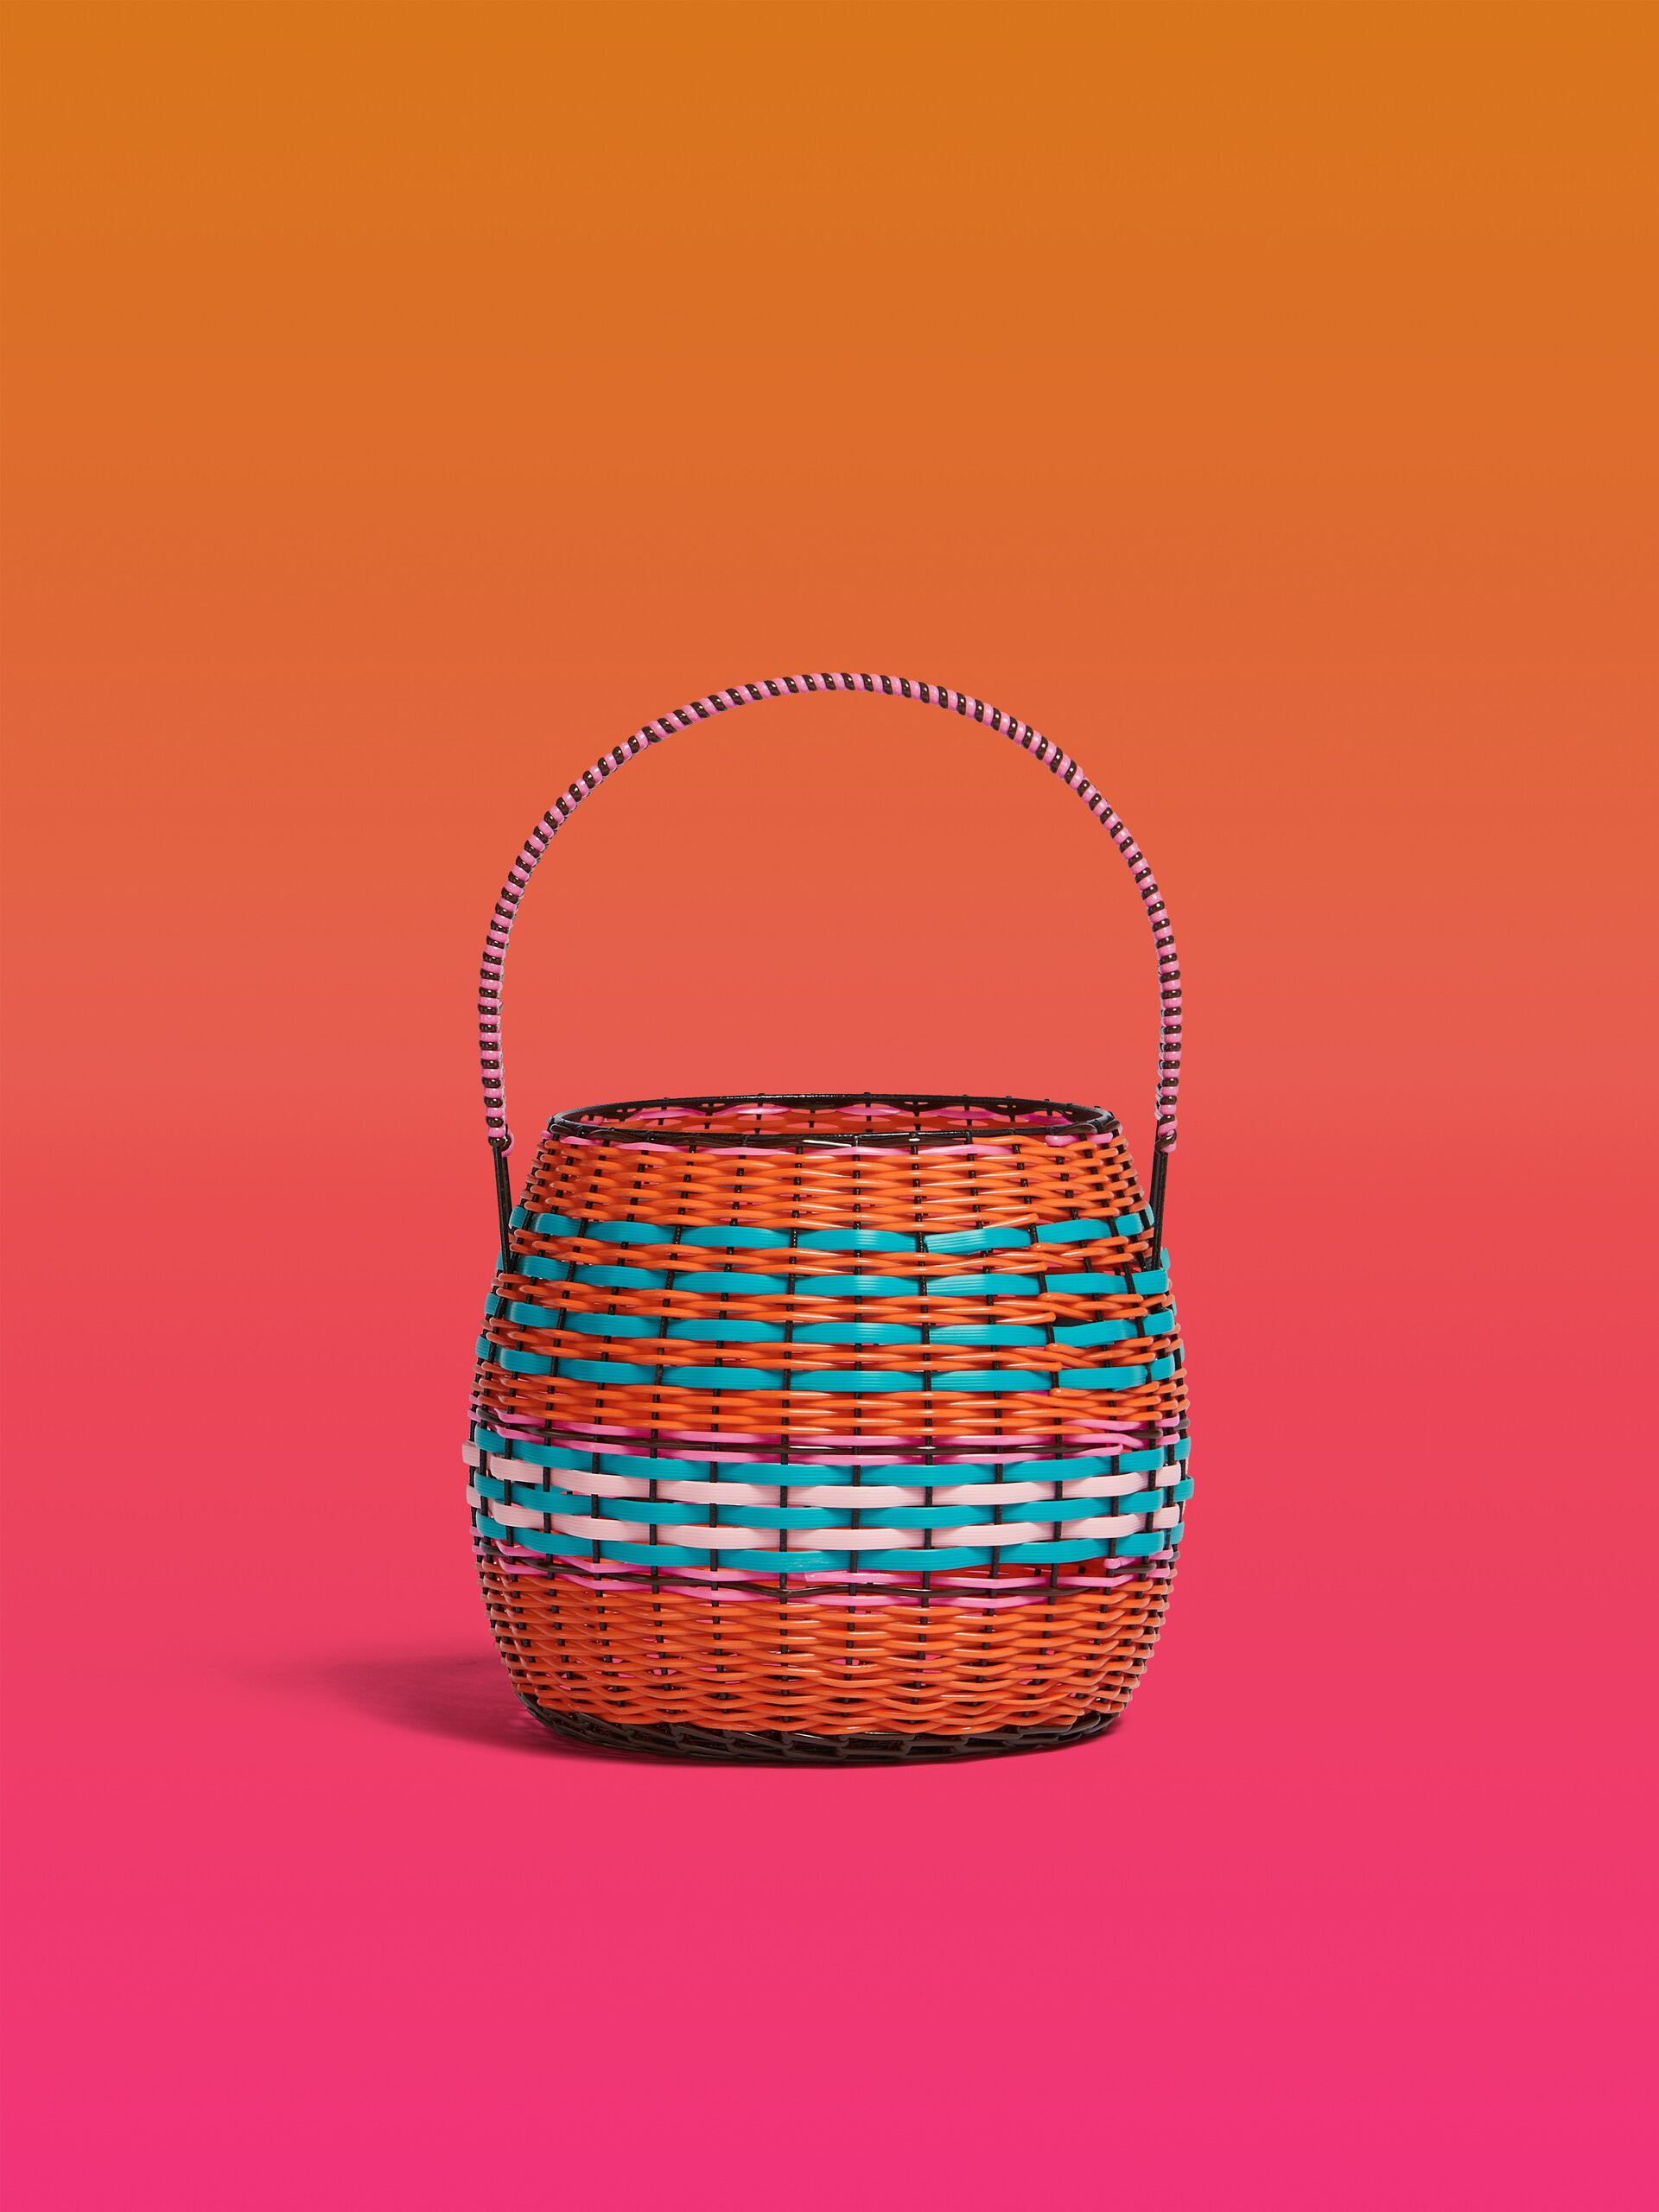 Orange MARNI MARKET woven cable basket - Accessories - Image 1